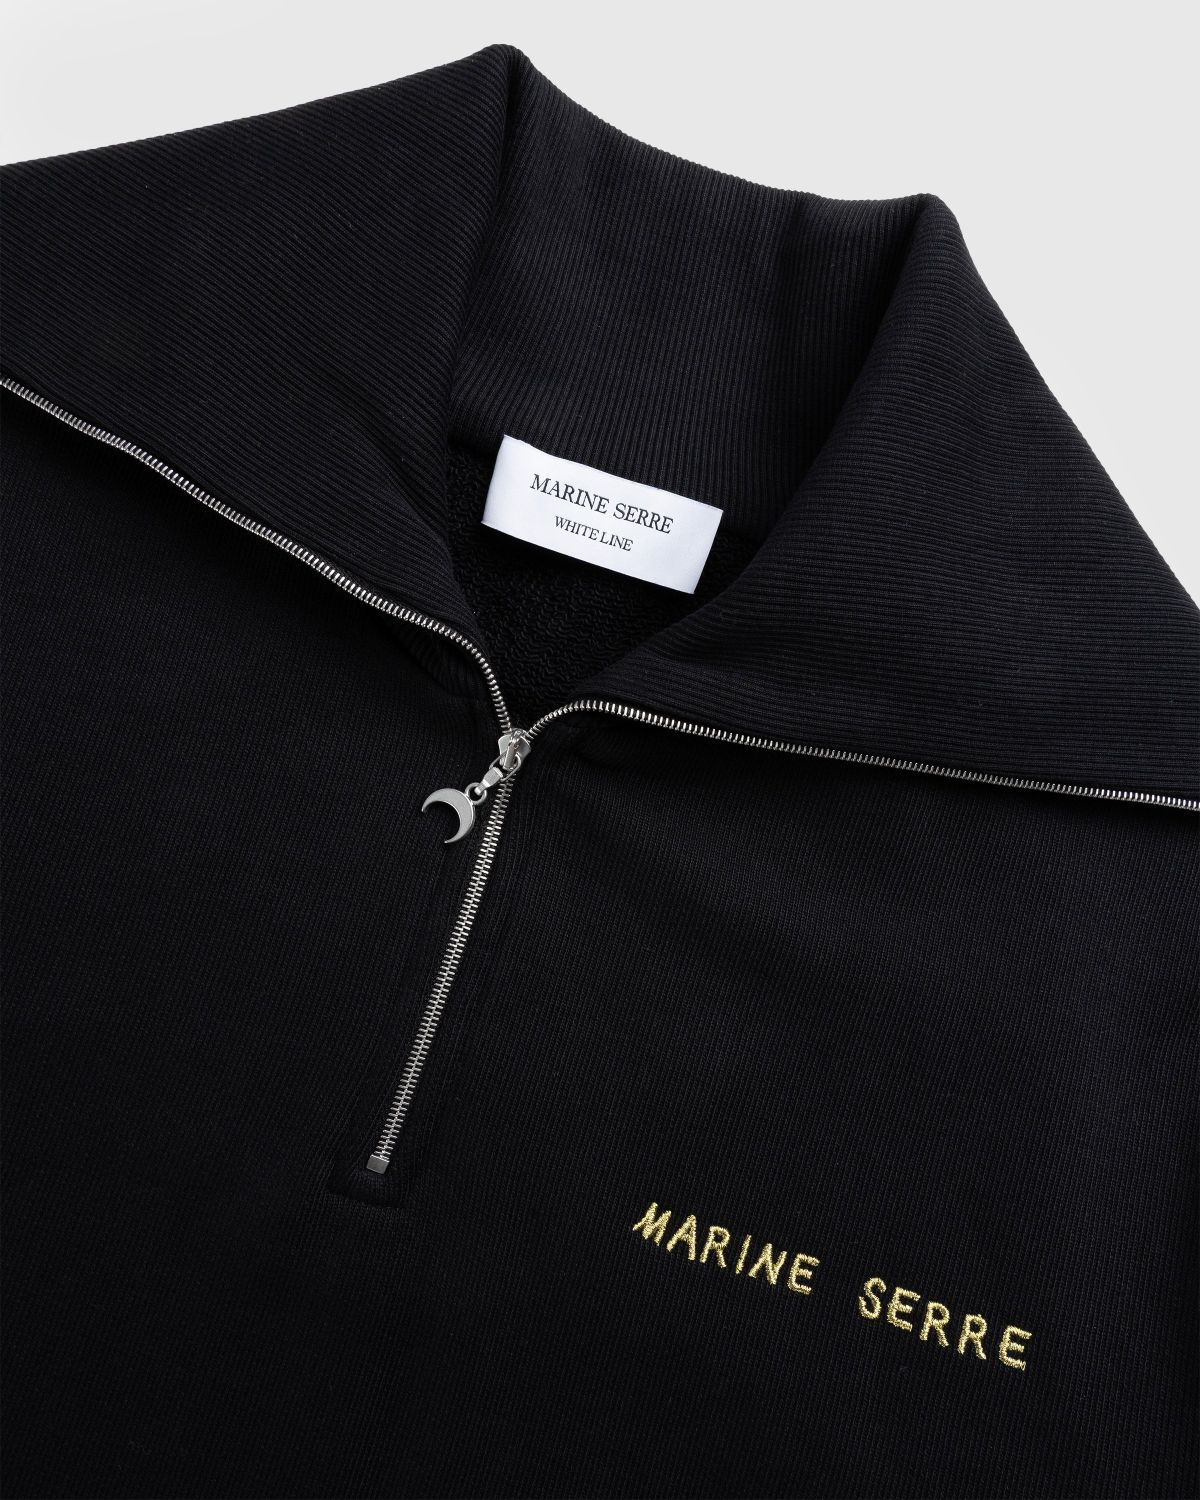 Marine Serre – Ornament Half-Zip Sweater Black - Knitwear - Black - Image 5